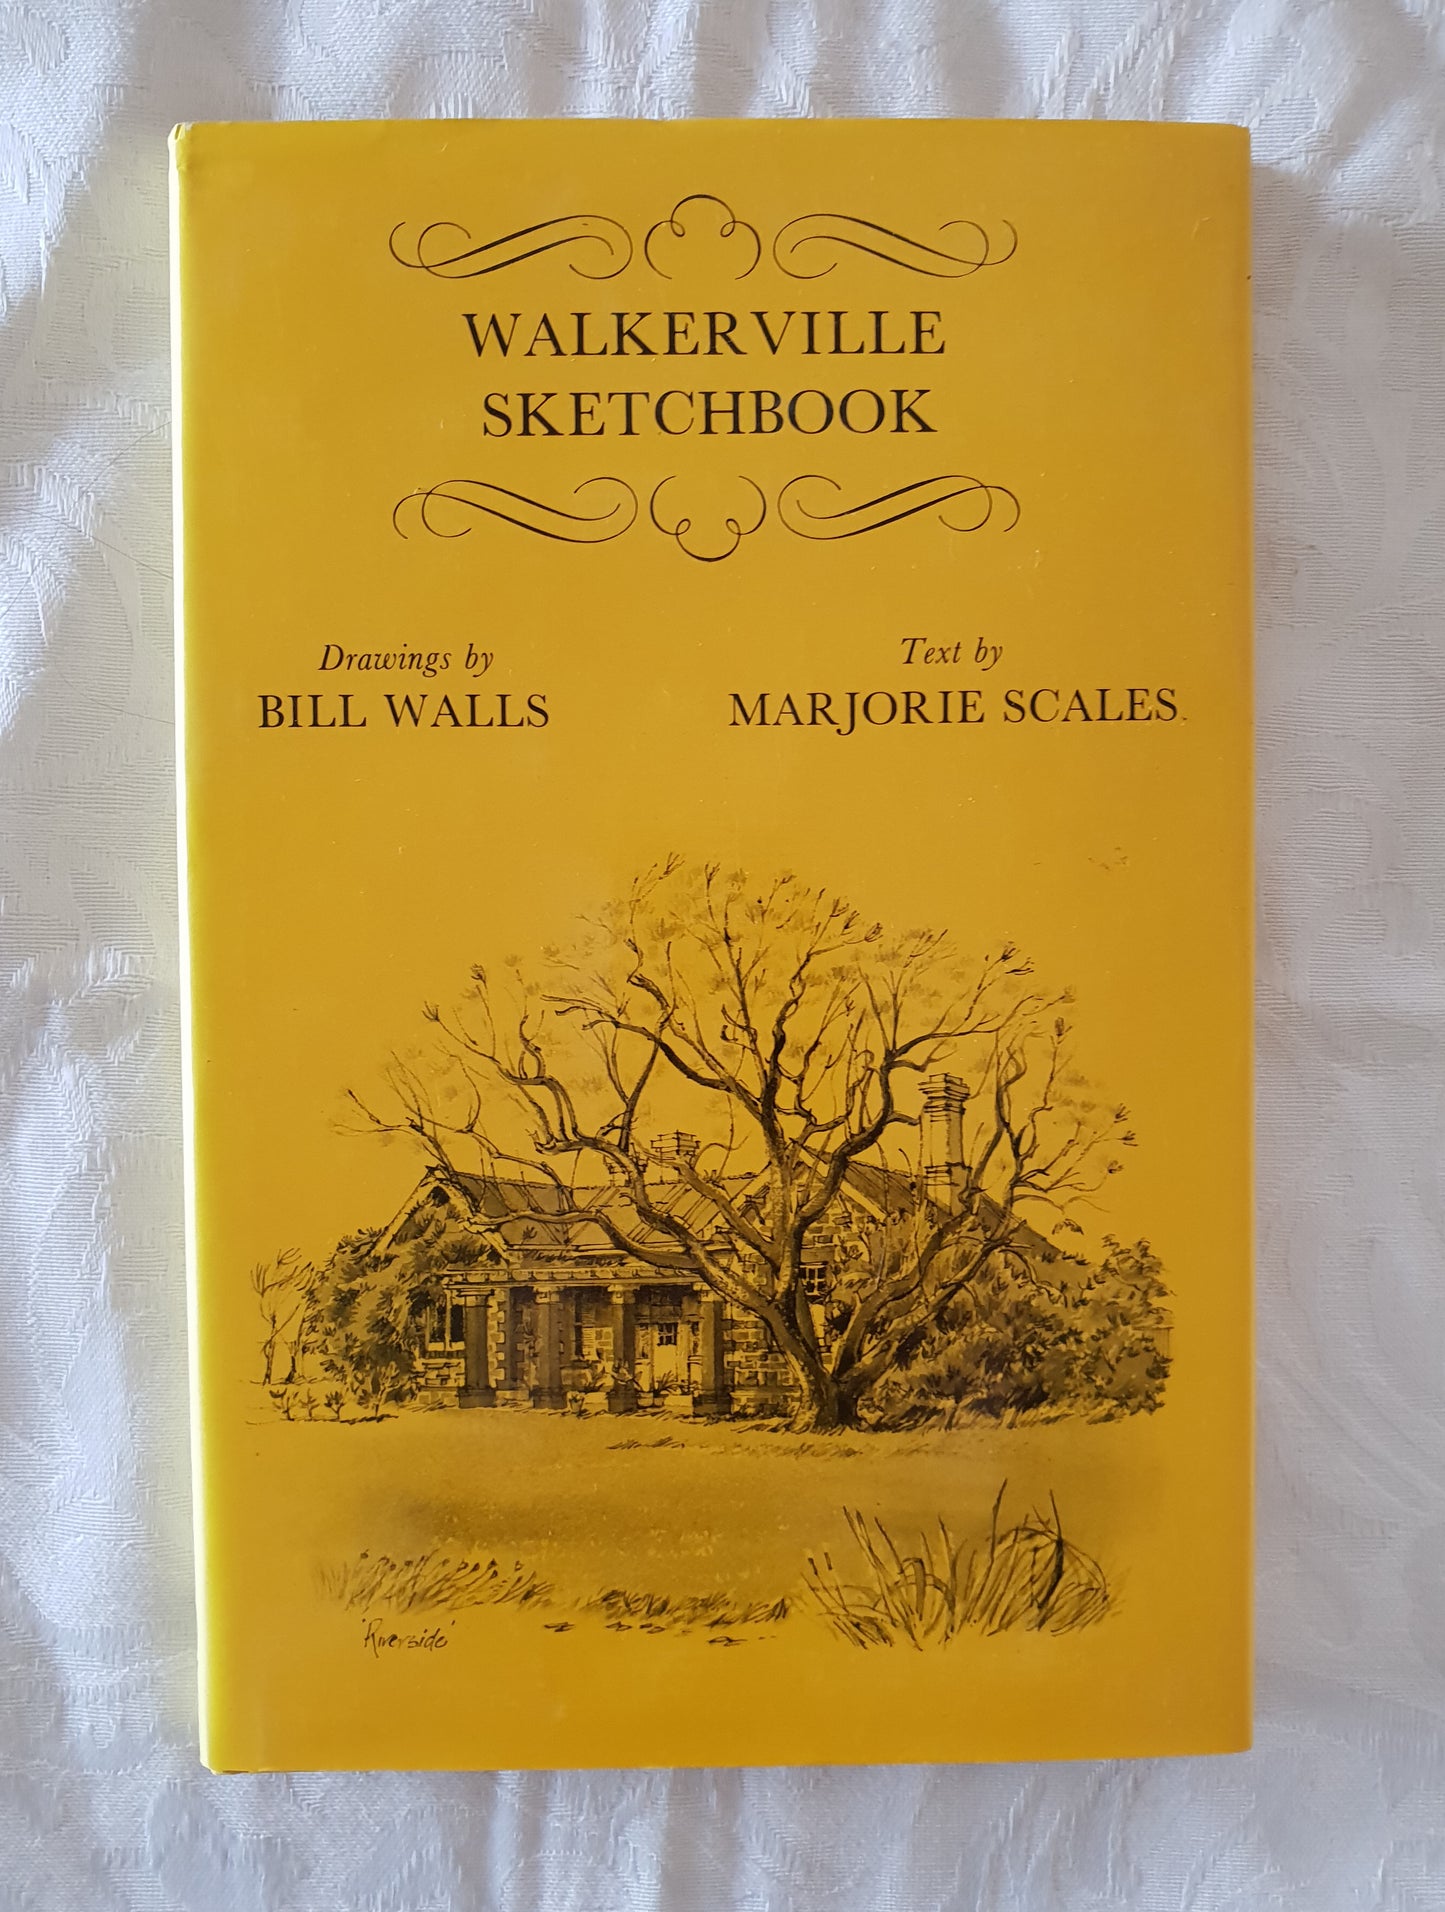 Walkerville Sketchbook by Bill Walls and Marjorie Scales